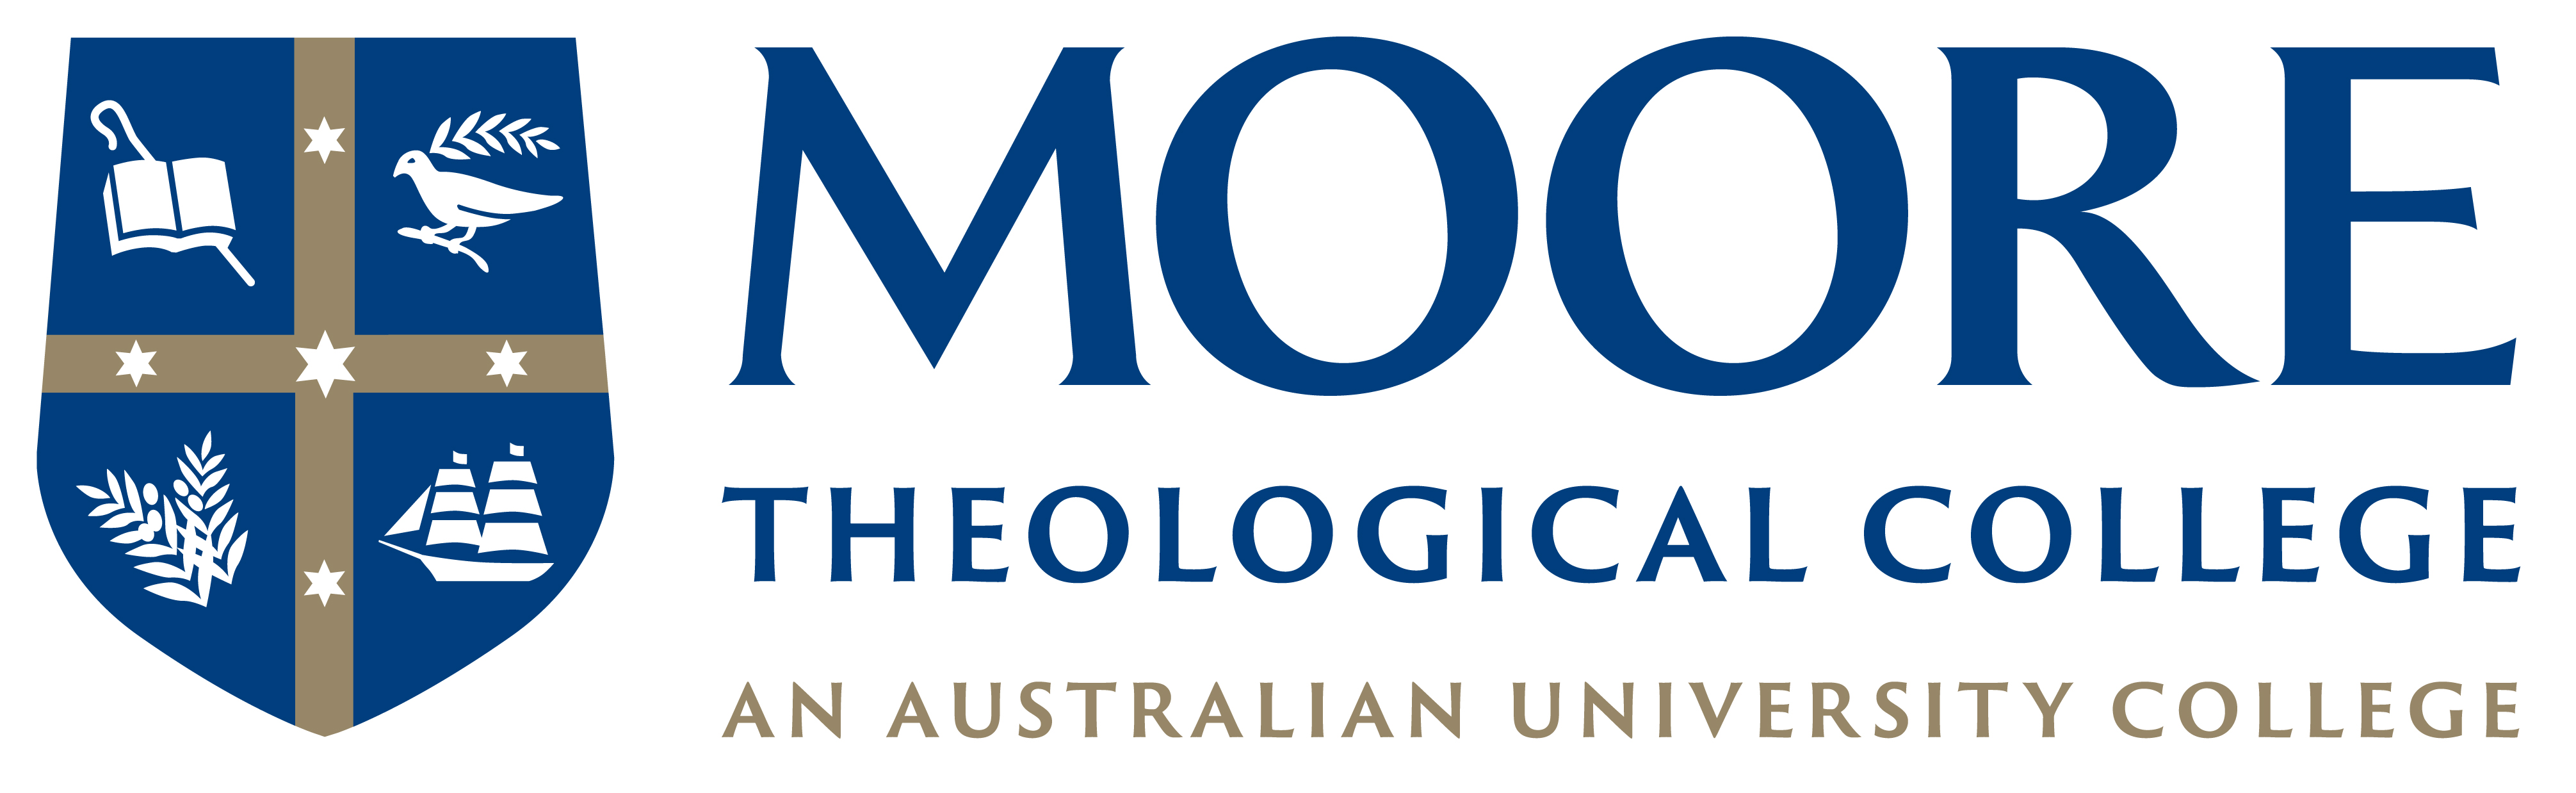 Moore_Theological_College_University-Landscape-Logo_RGB.JPG